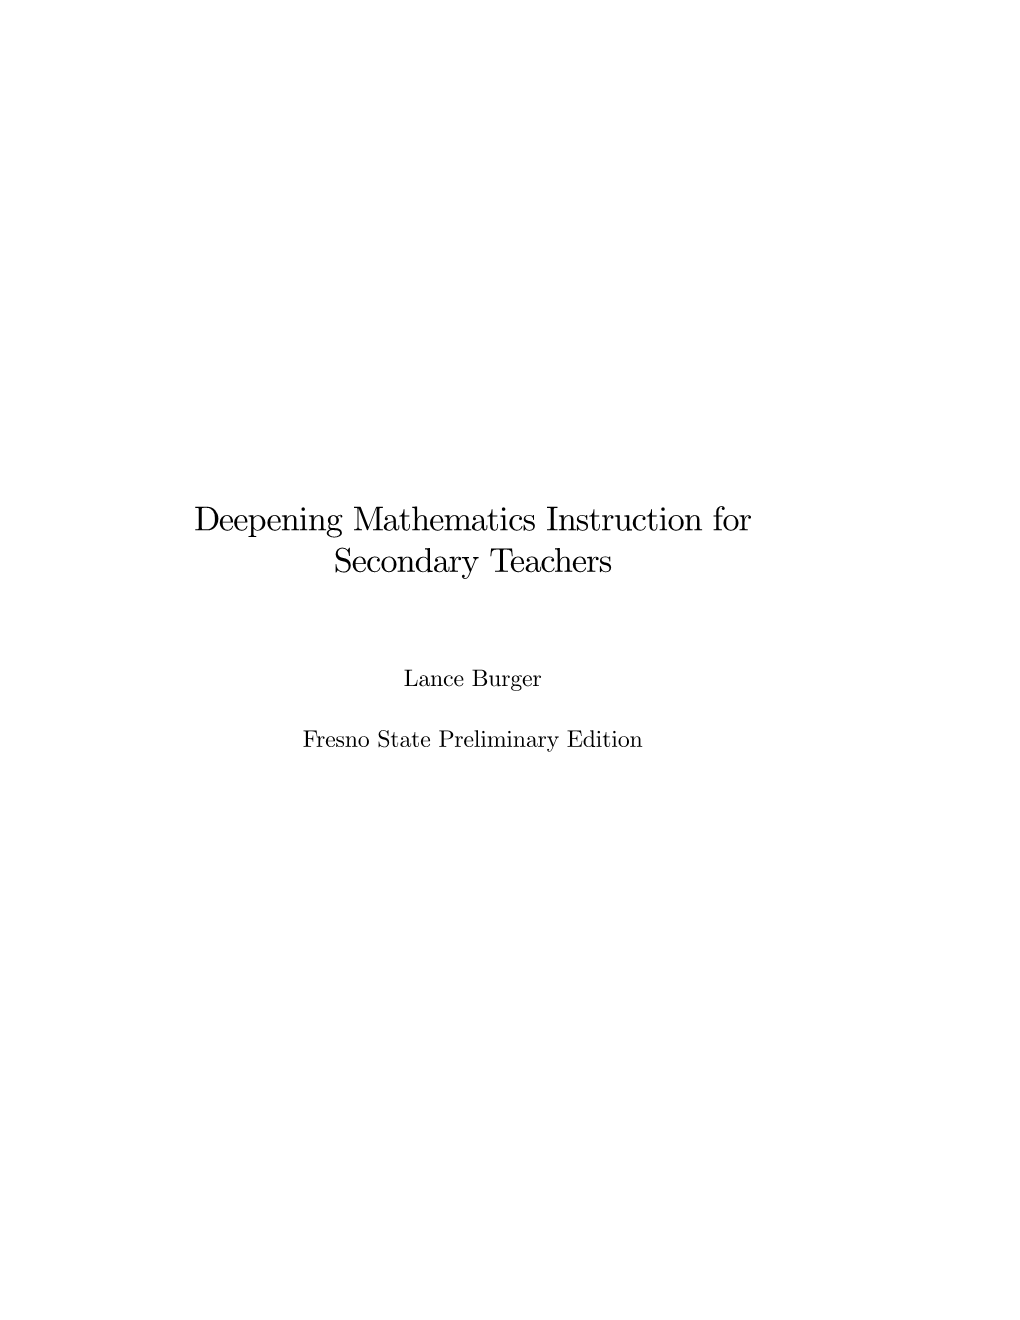 Deepening Mathematics Instruction for Secondary Teachers